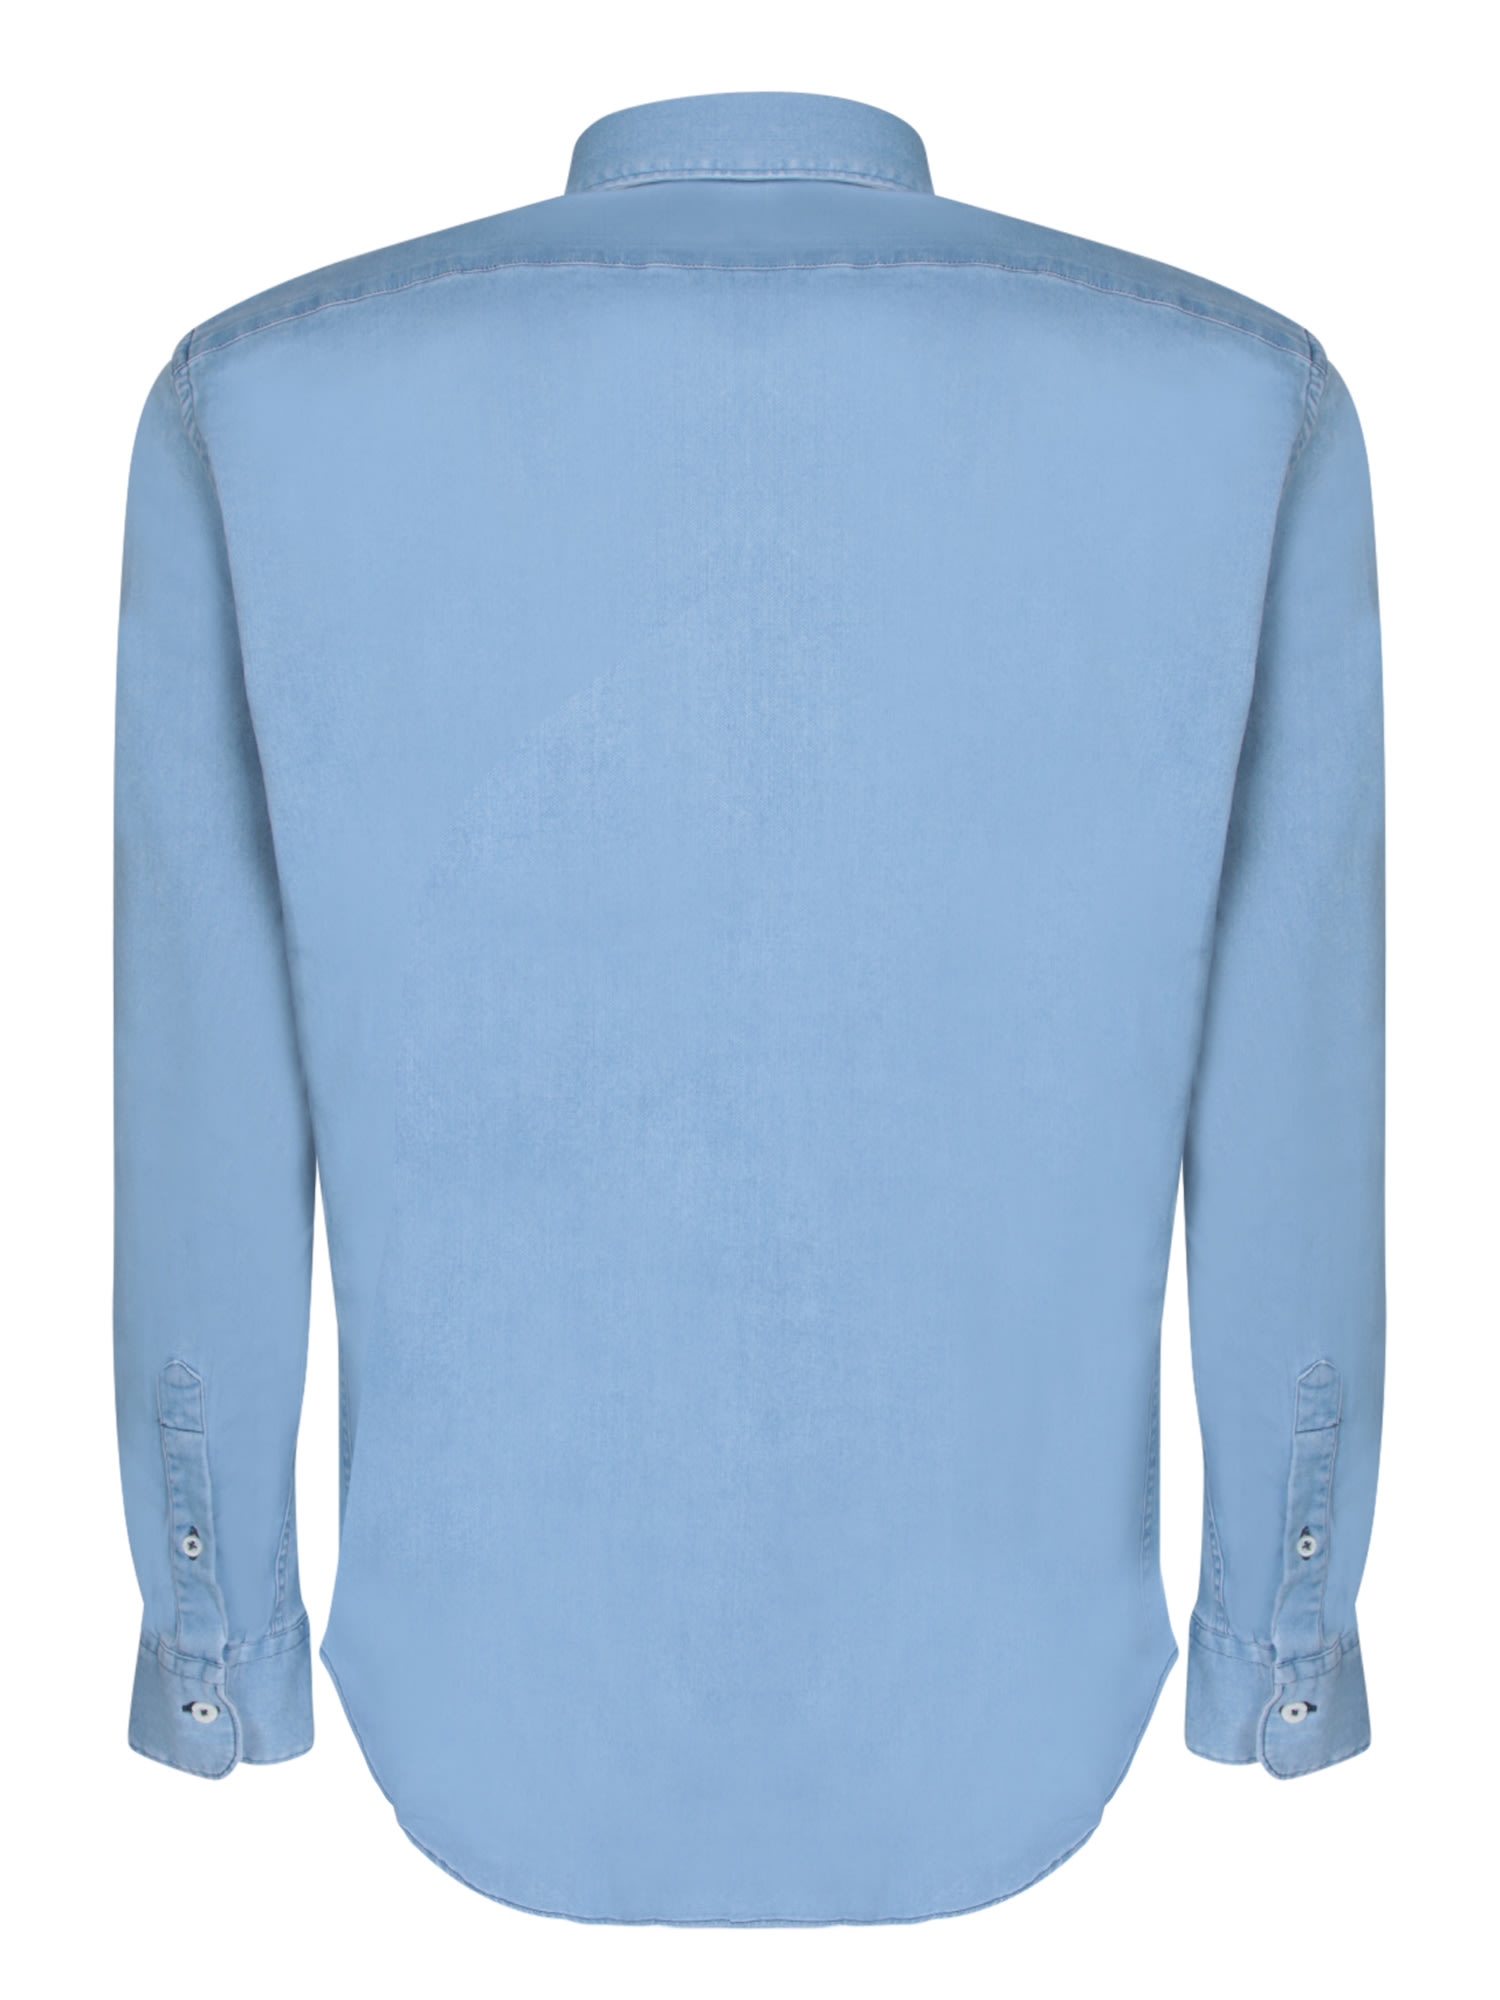 Shop Canali Denim Blue Shirt